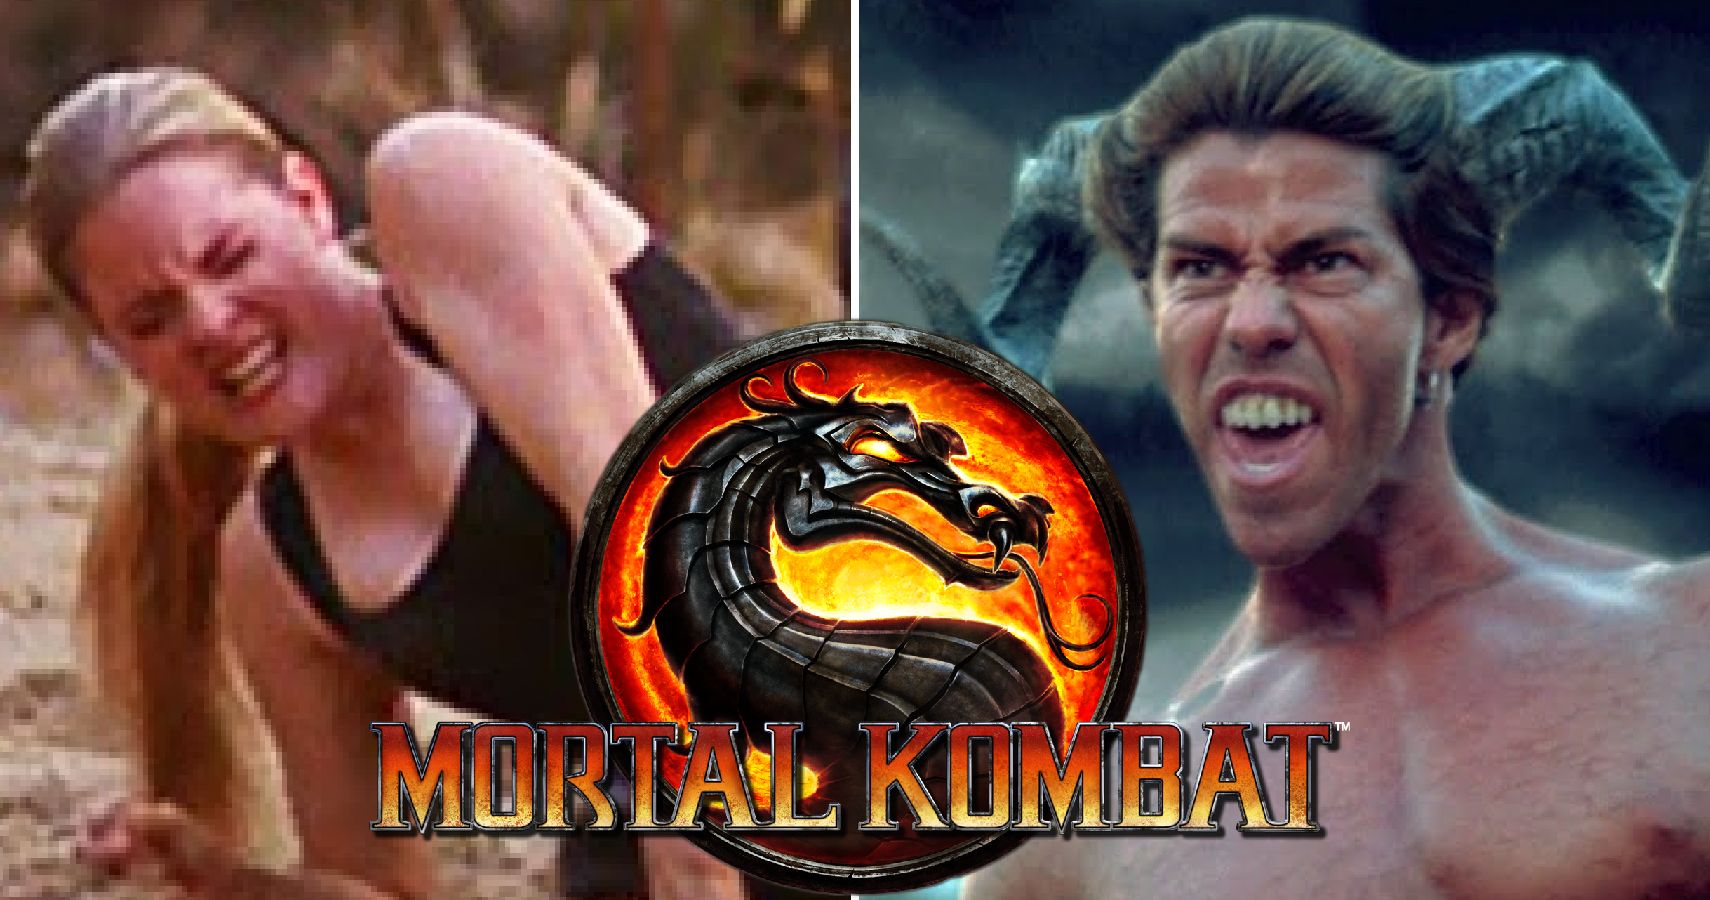 The Making Of The Mortal Kombat Film